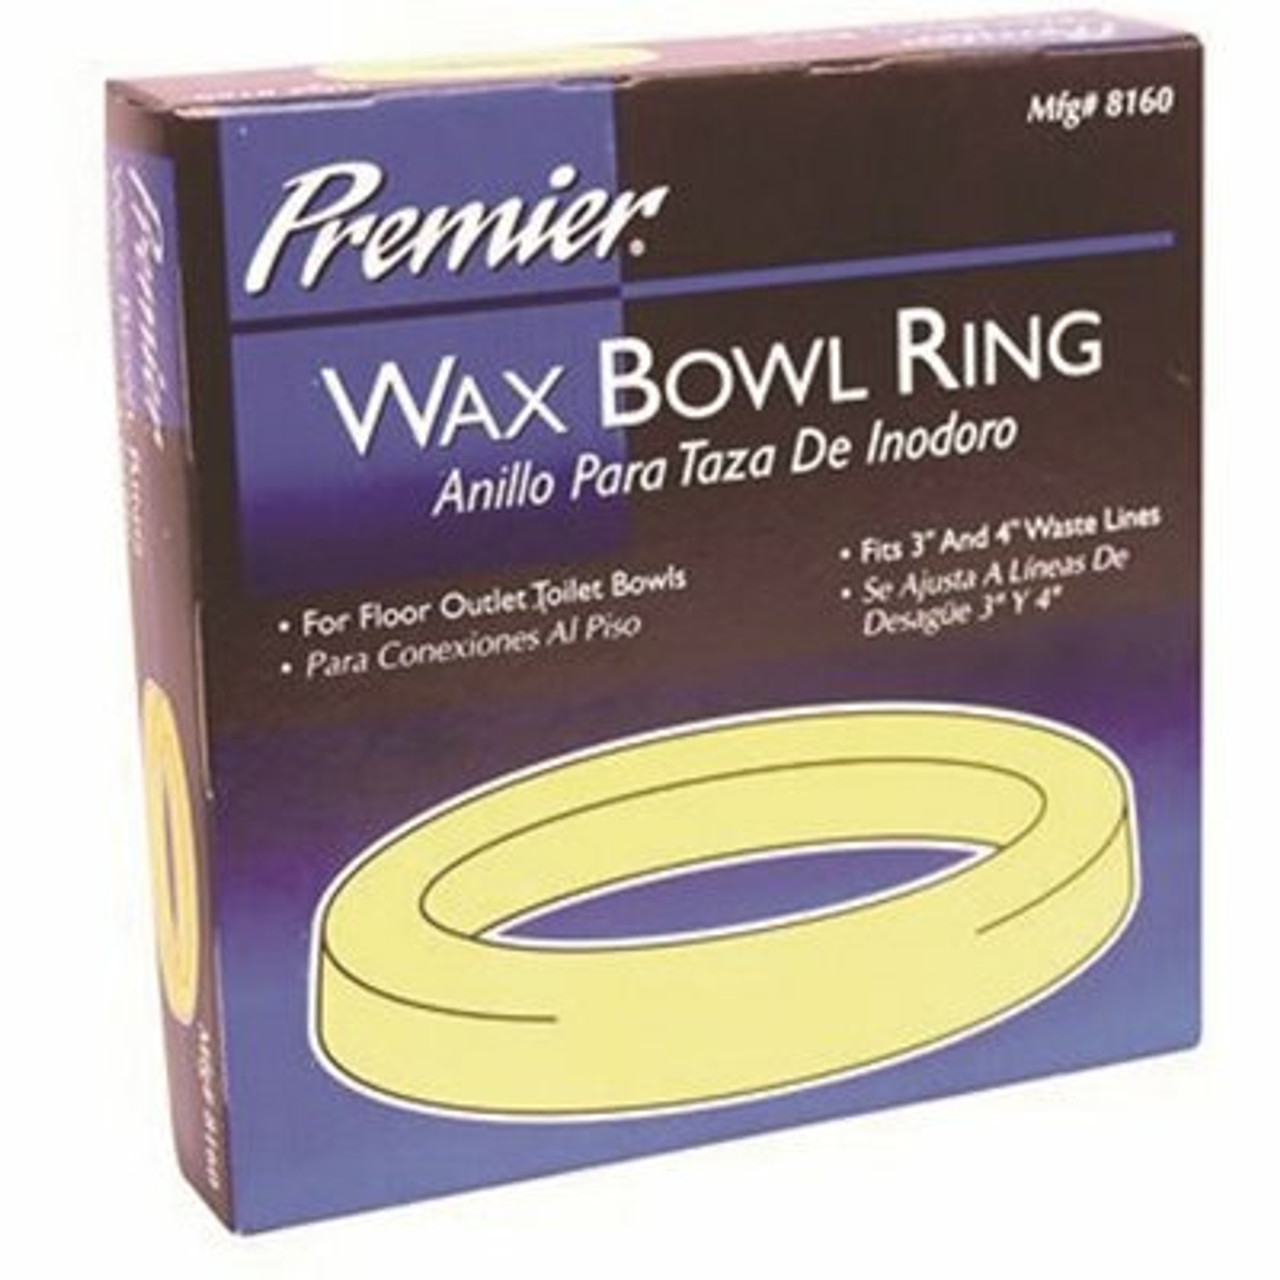 Premier Wax Ring